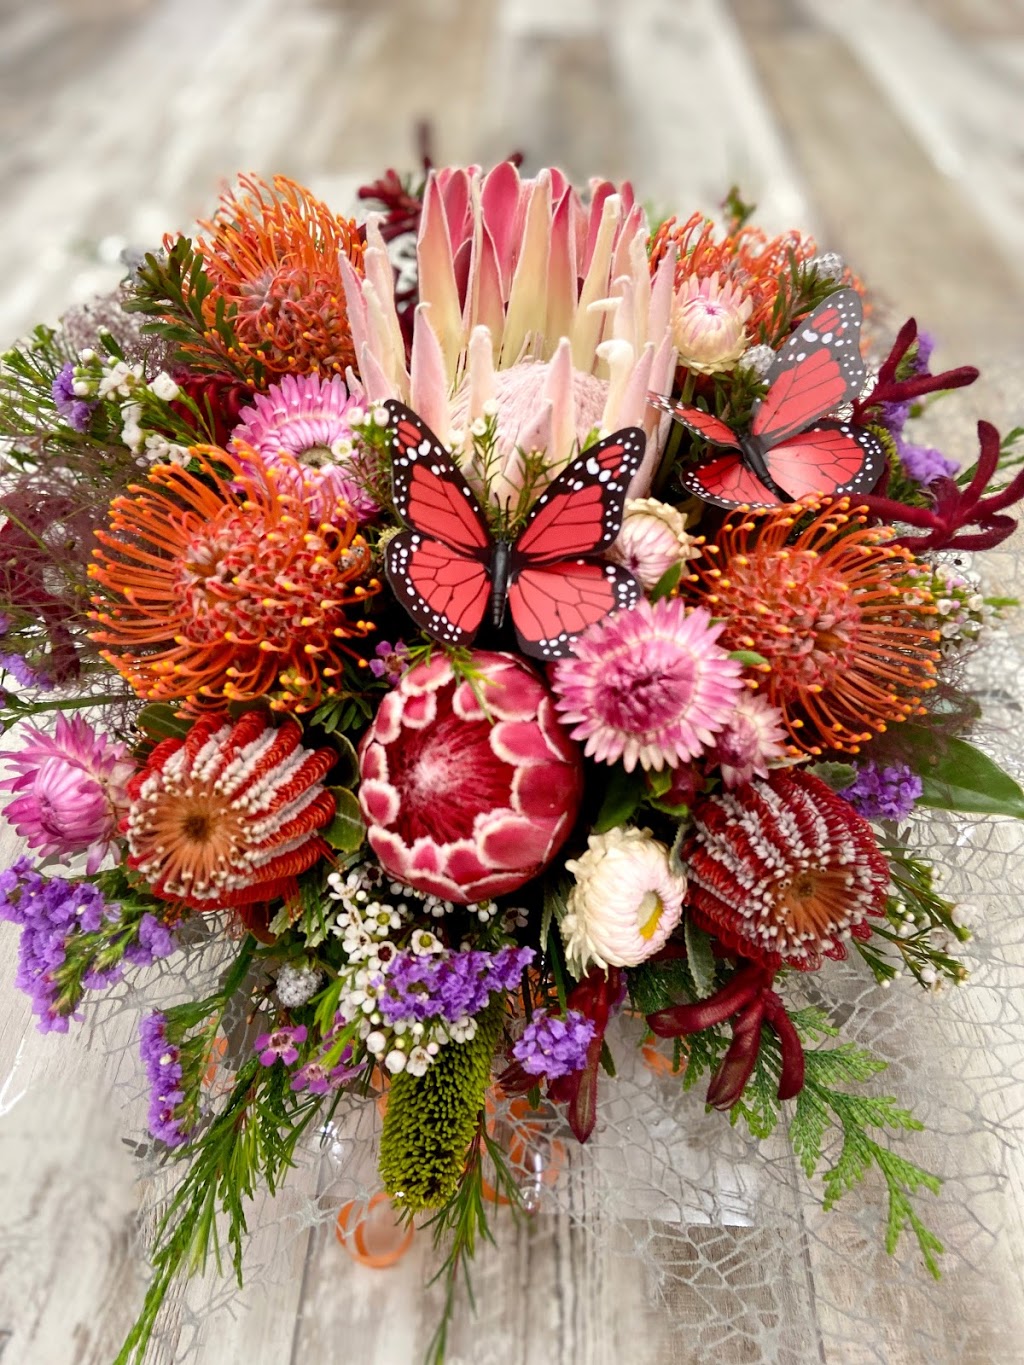 Bewitched Flowers & Gifts | Shop 4/3 Carleton St, Kambah ACT 2902, Australia | Phone: (02) 6181 8677